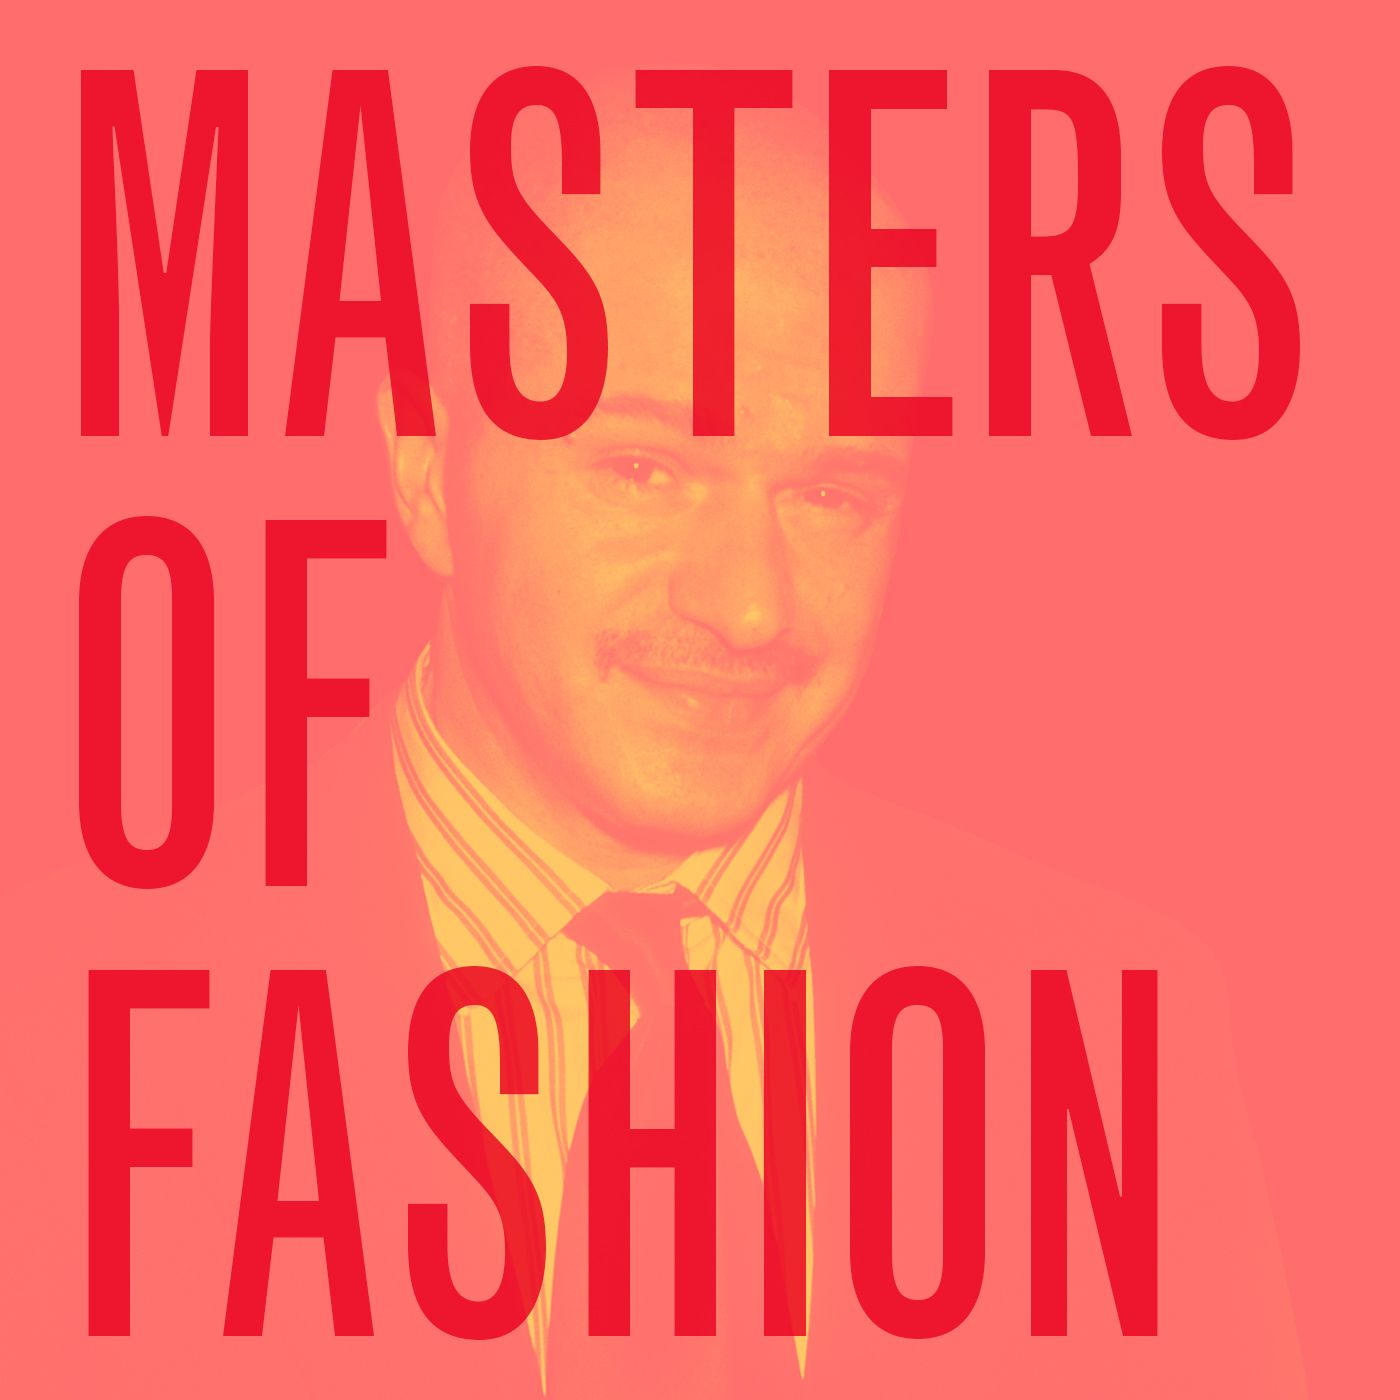 Masters of Fashion - Franco Moschino